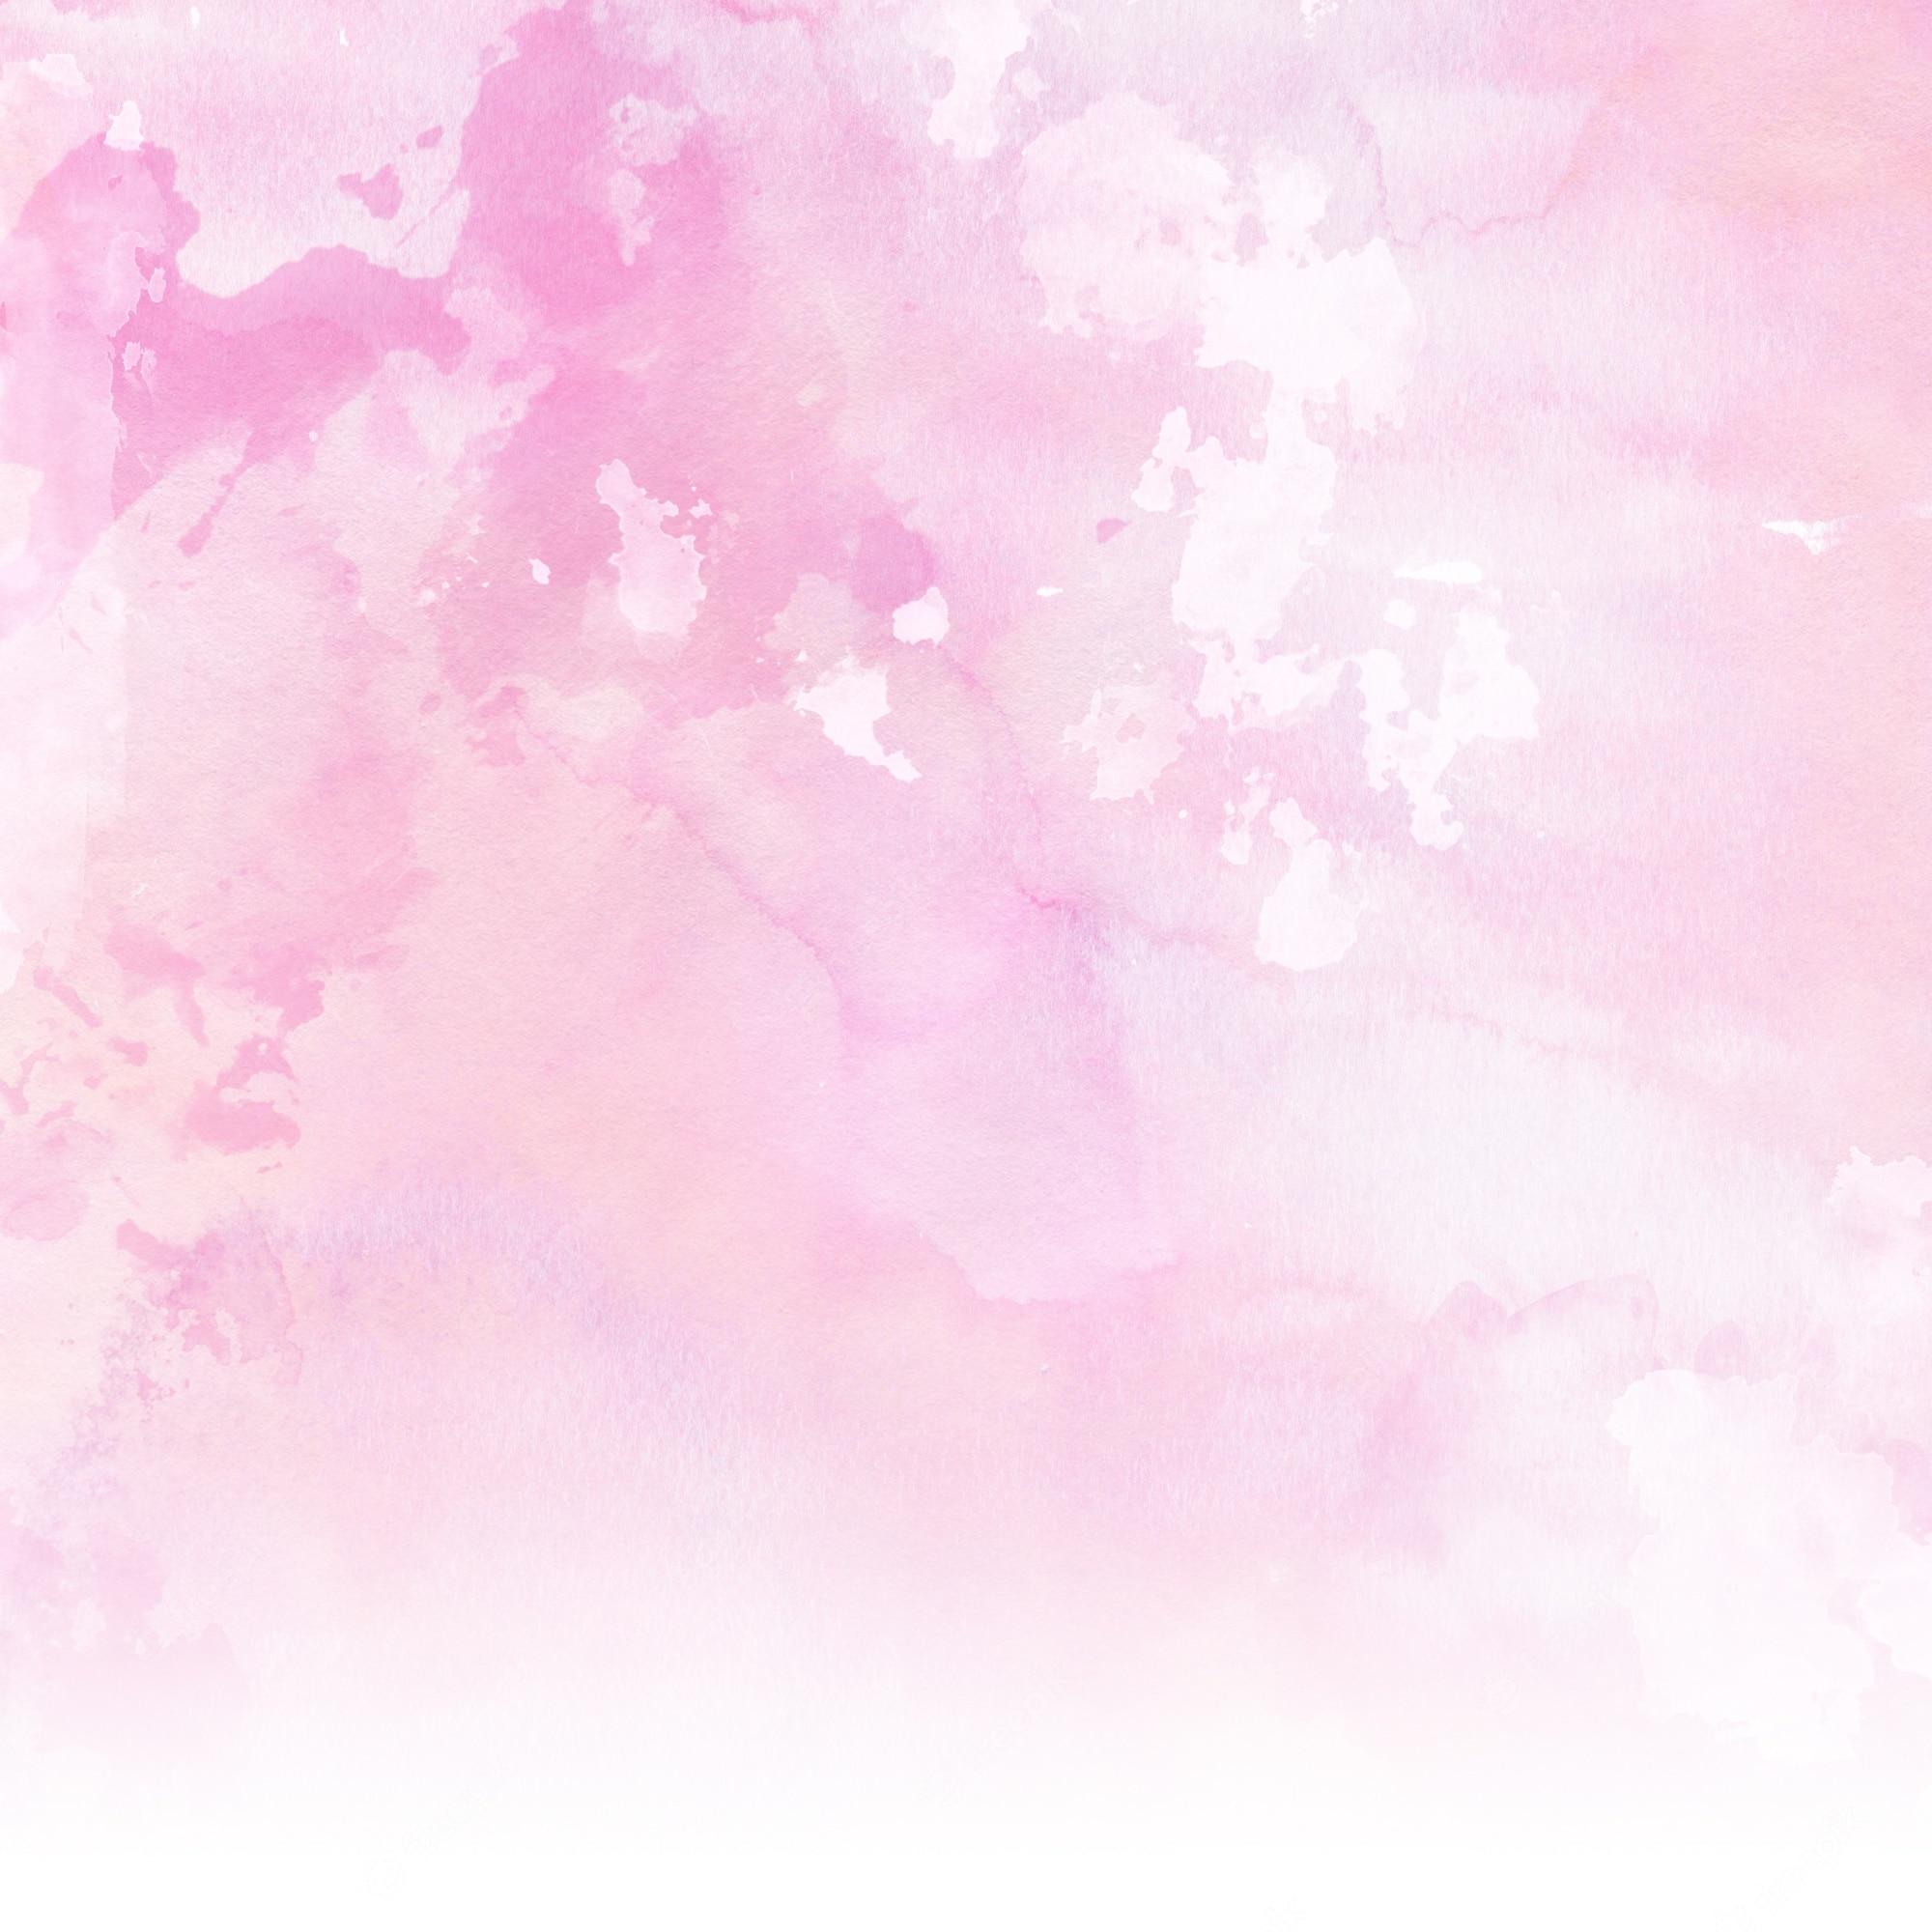 Pastel Pink Watercolor Wallpapers - Top Free Pastel Pink Watercolor ...